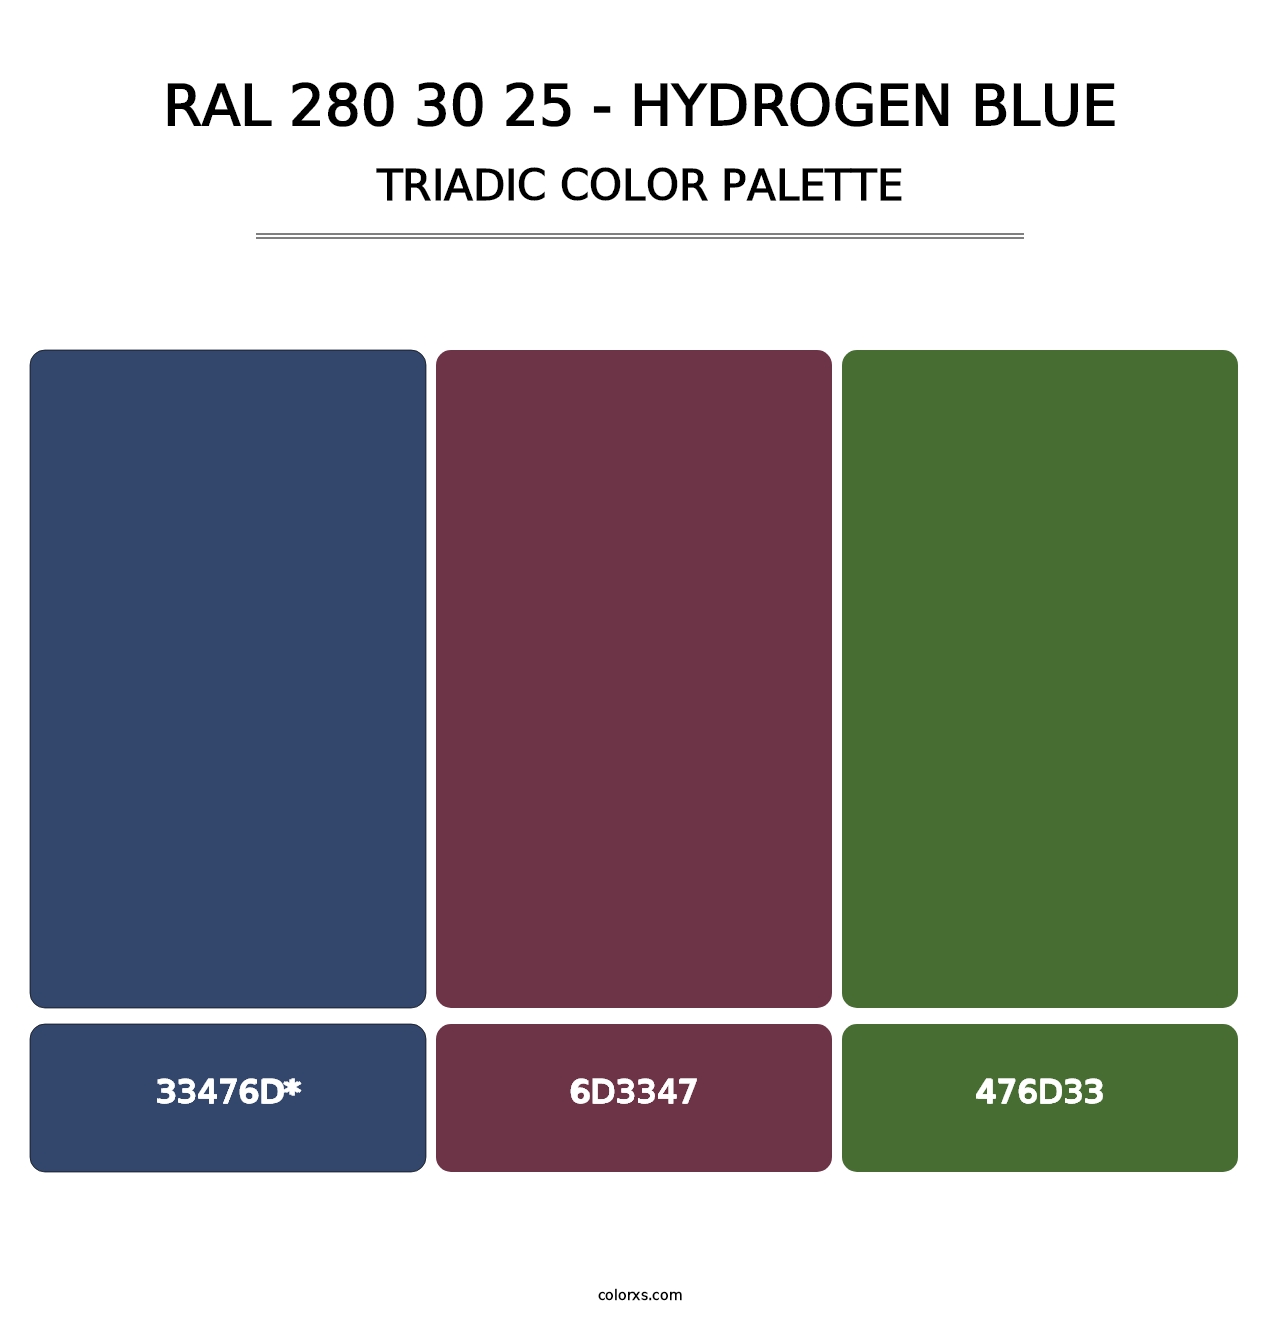 RAL 280 30 25 - Hydrogen Blue - Triadic Color Palette